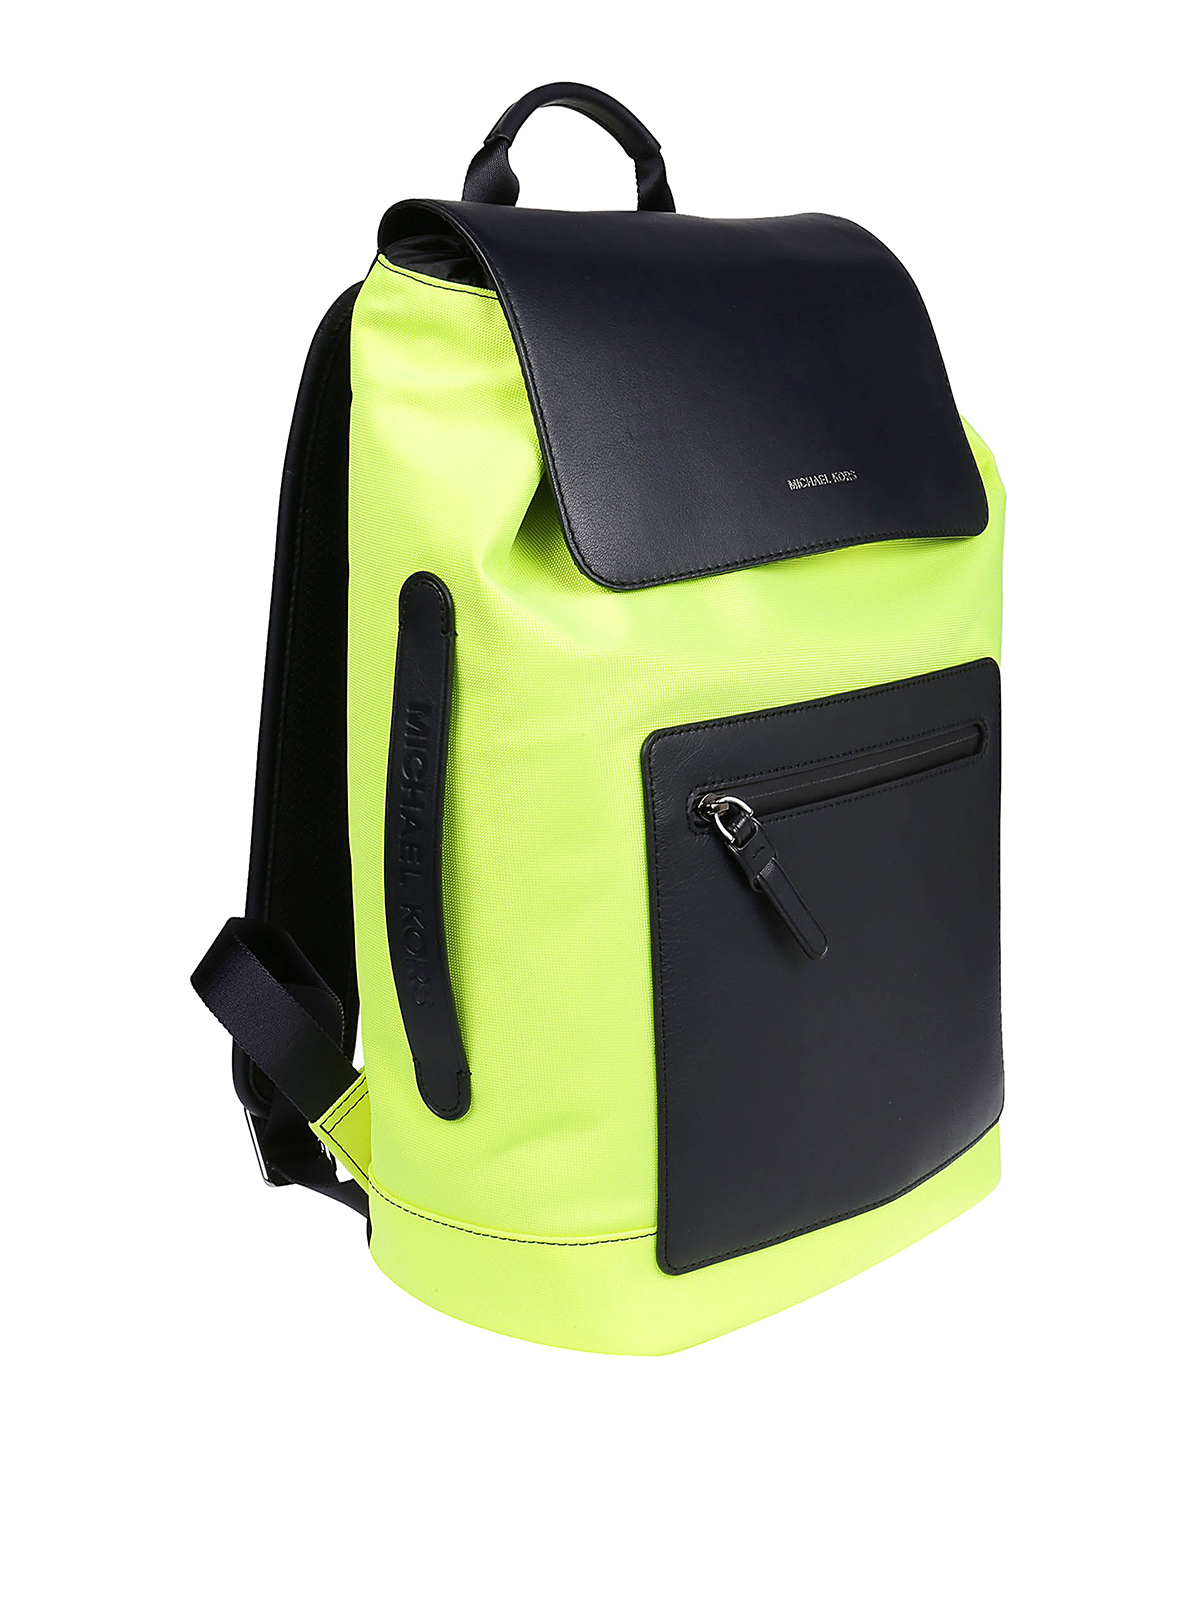 Backpacks Michael Kors - Brooklyn neon nylon backpack - 33S0LKKB8U703